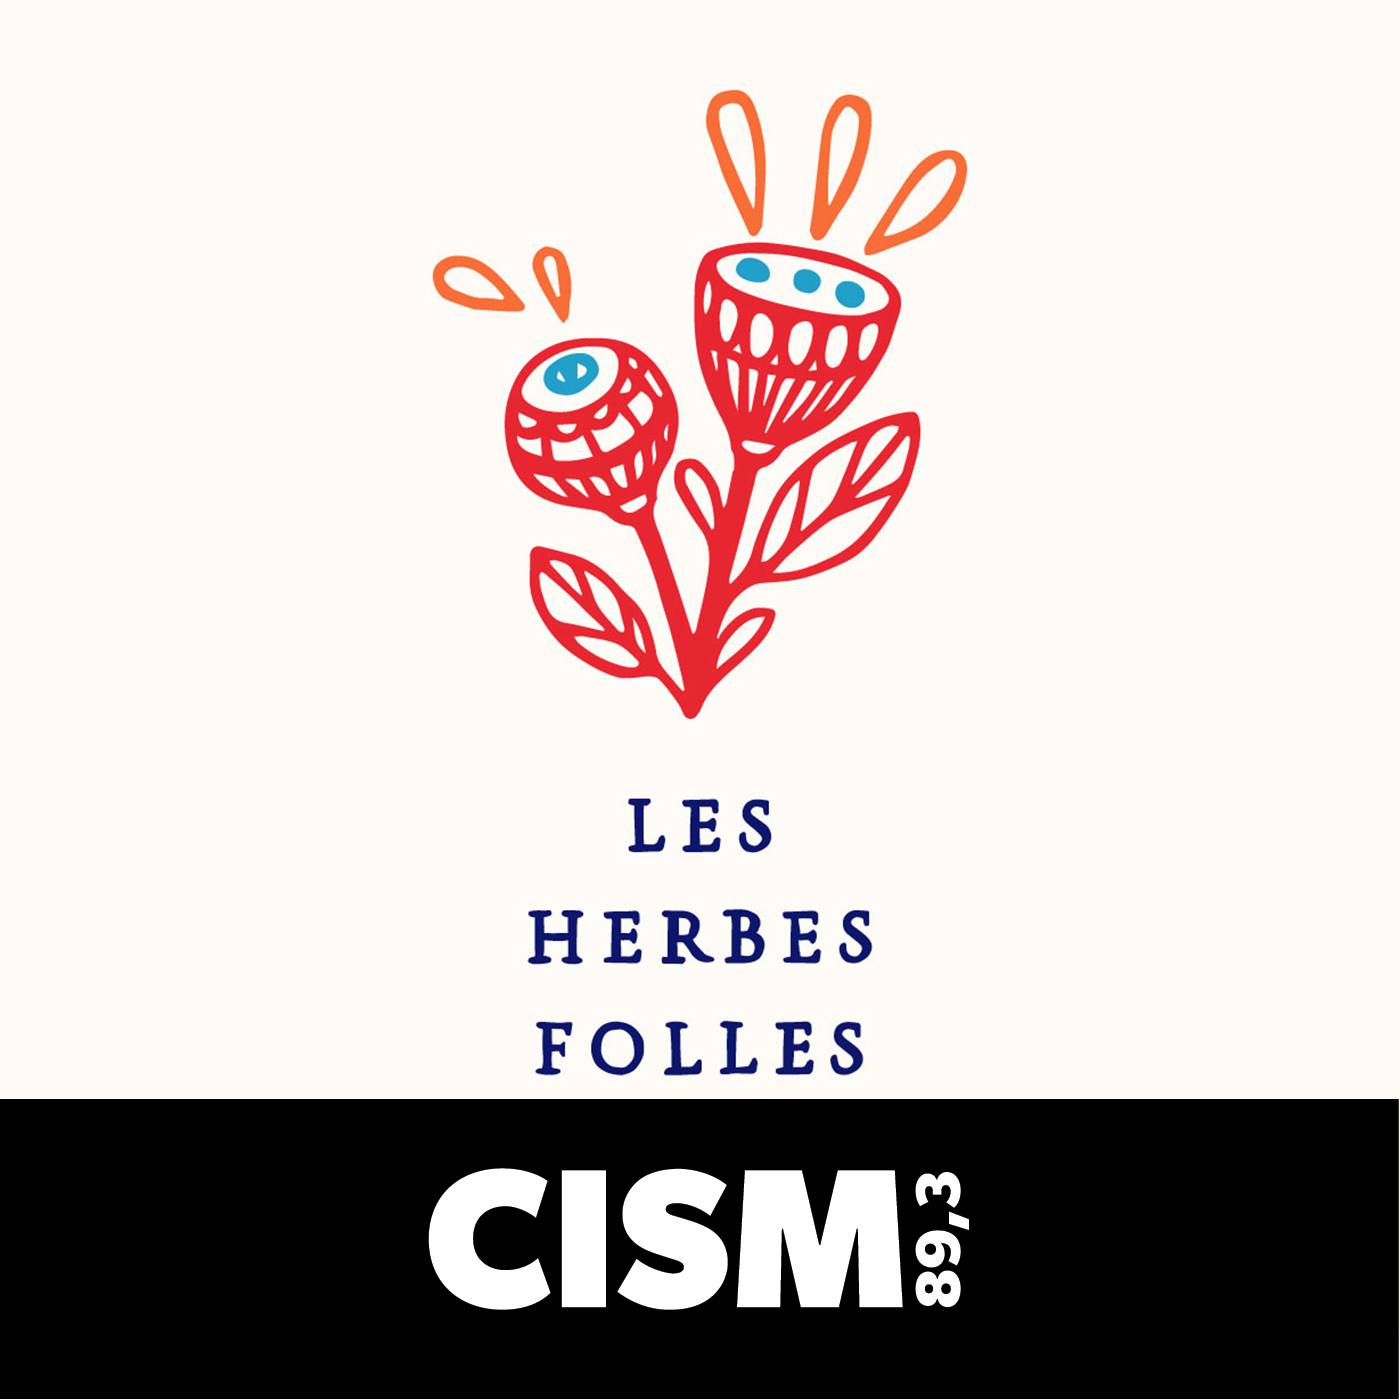 CISM 89.3 : Les herbes folles